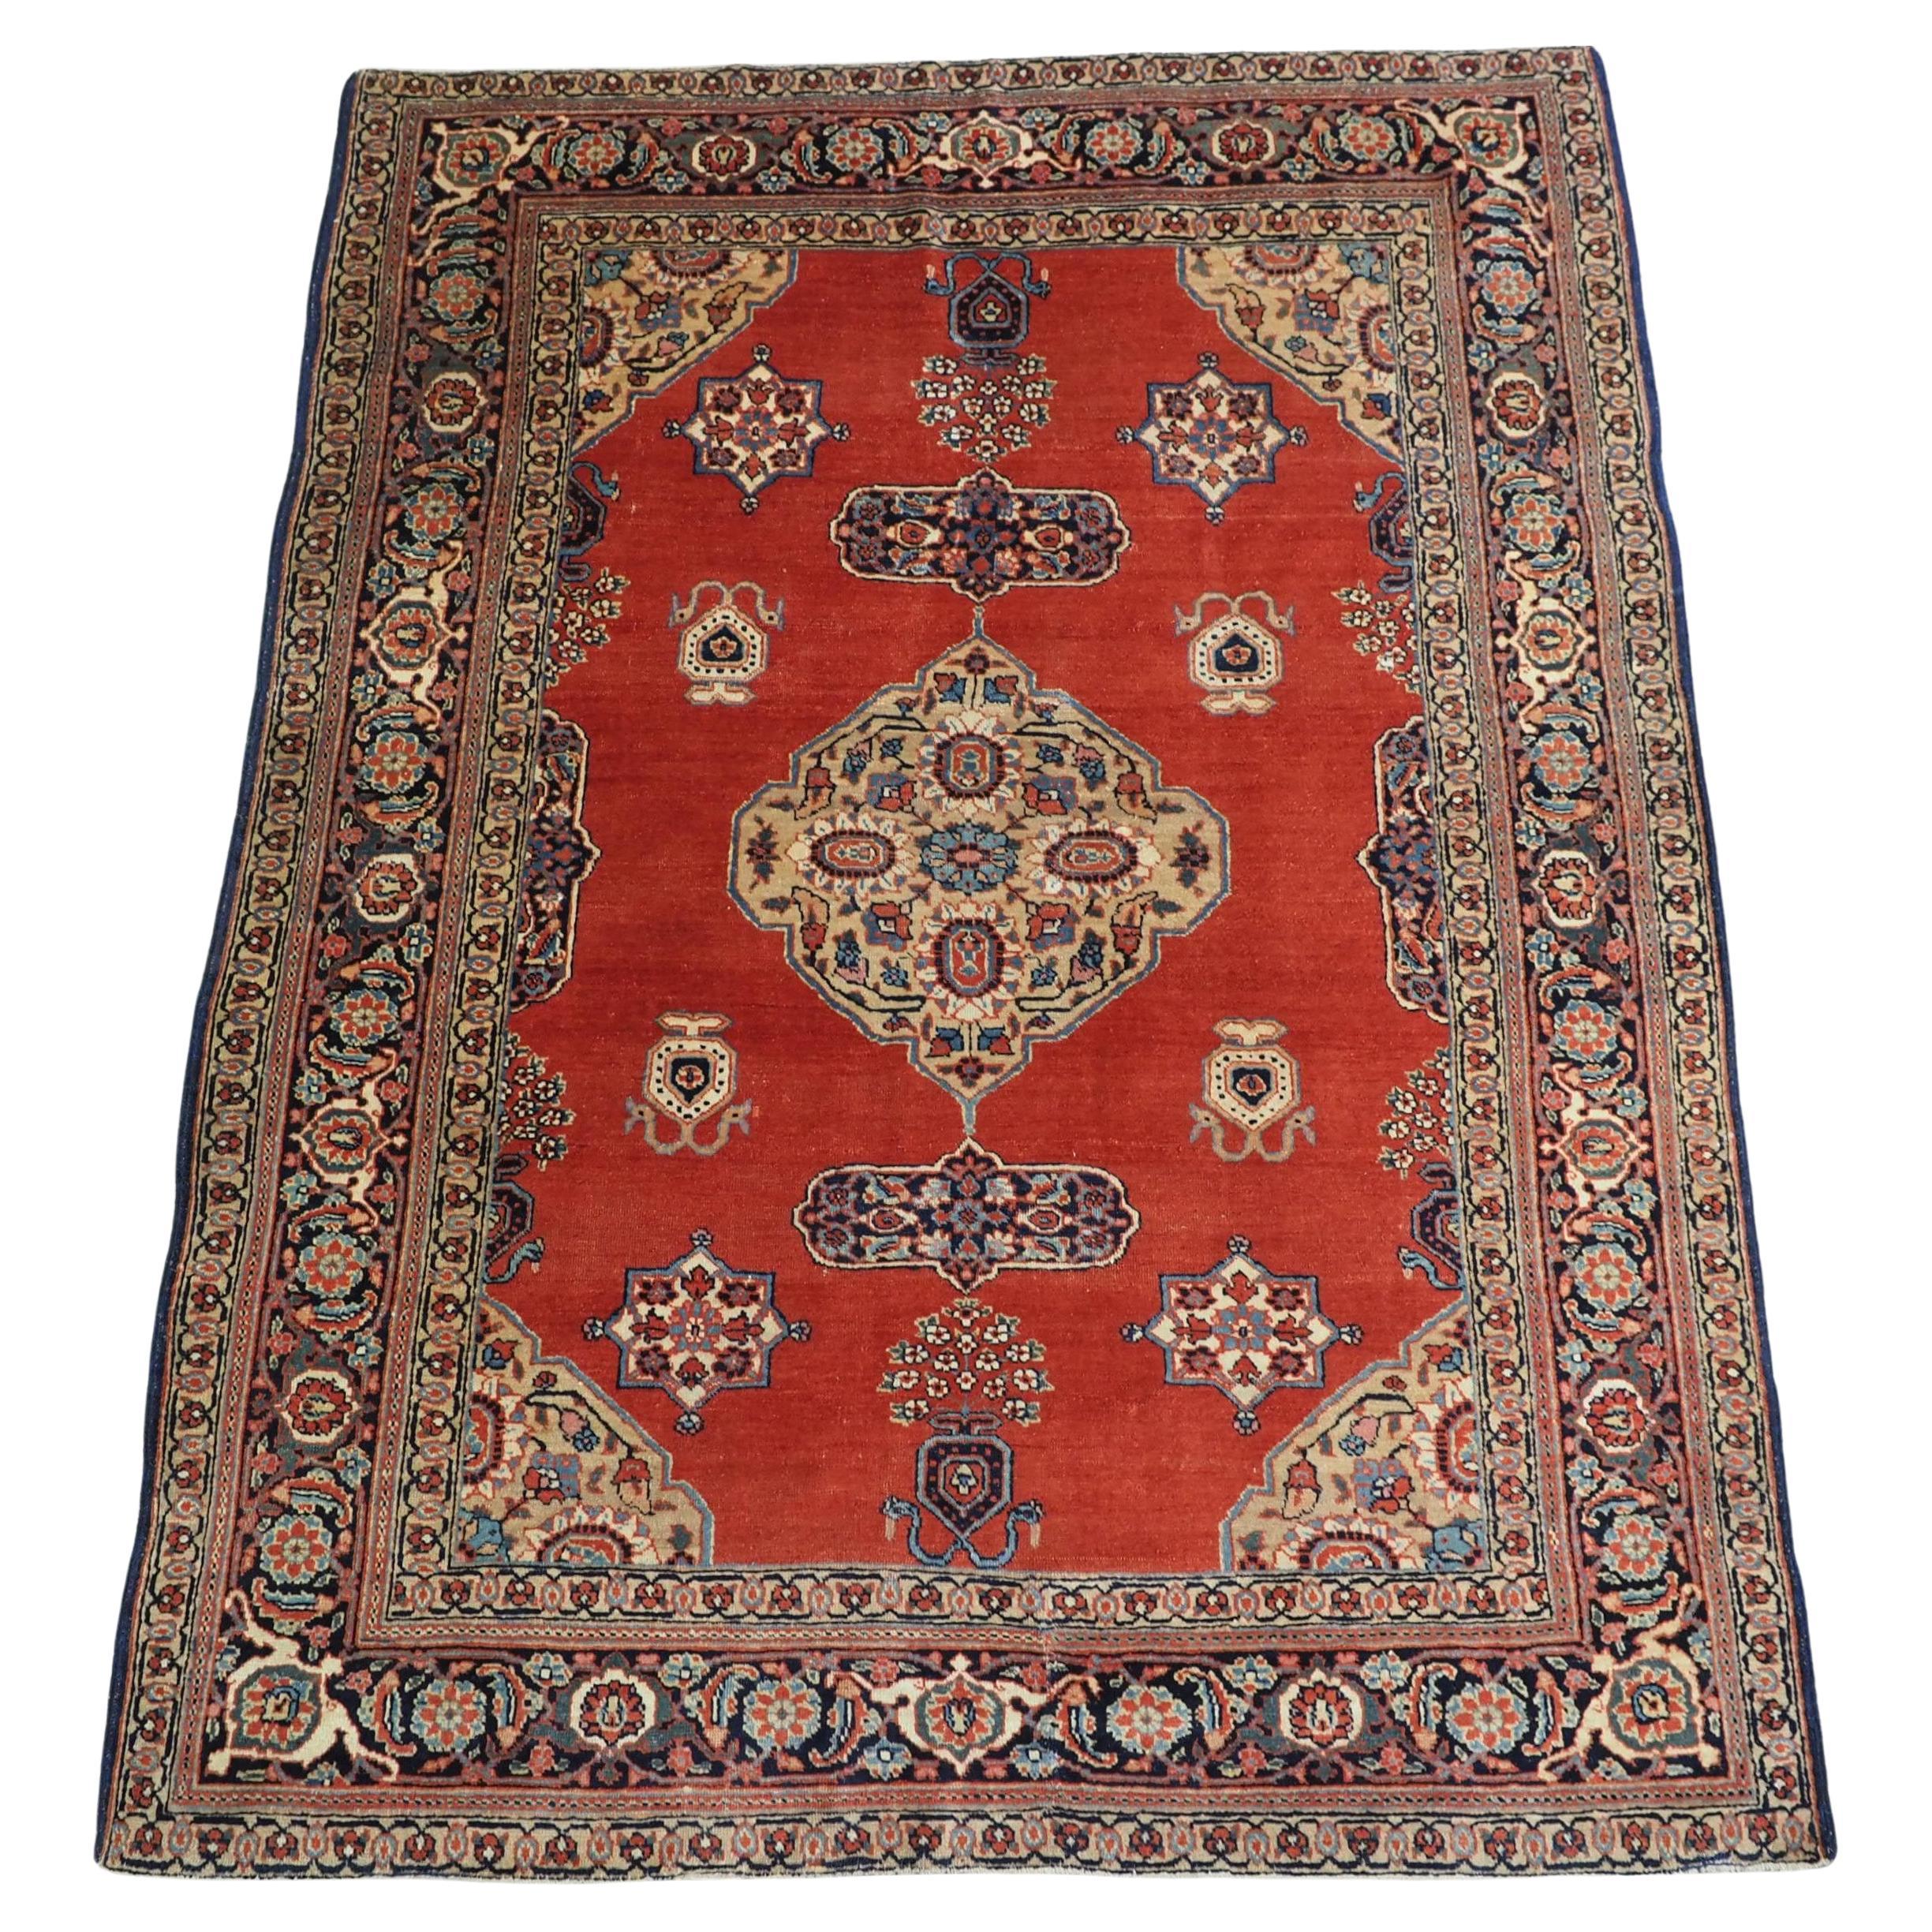 Antique Tabriz region village rug of outstanding design, circa 1900.